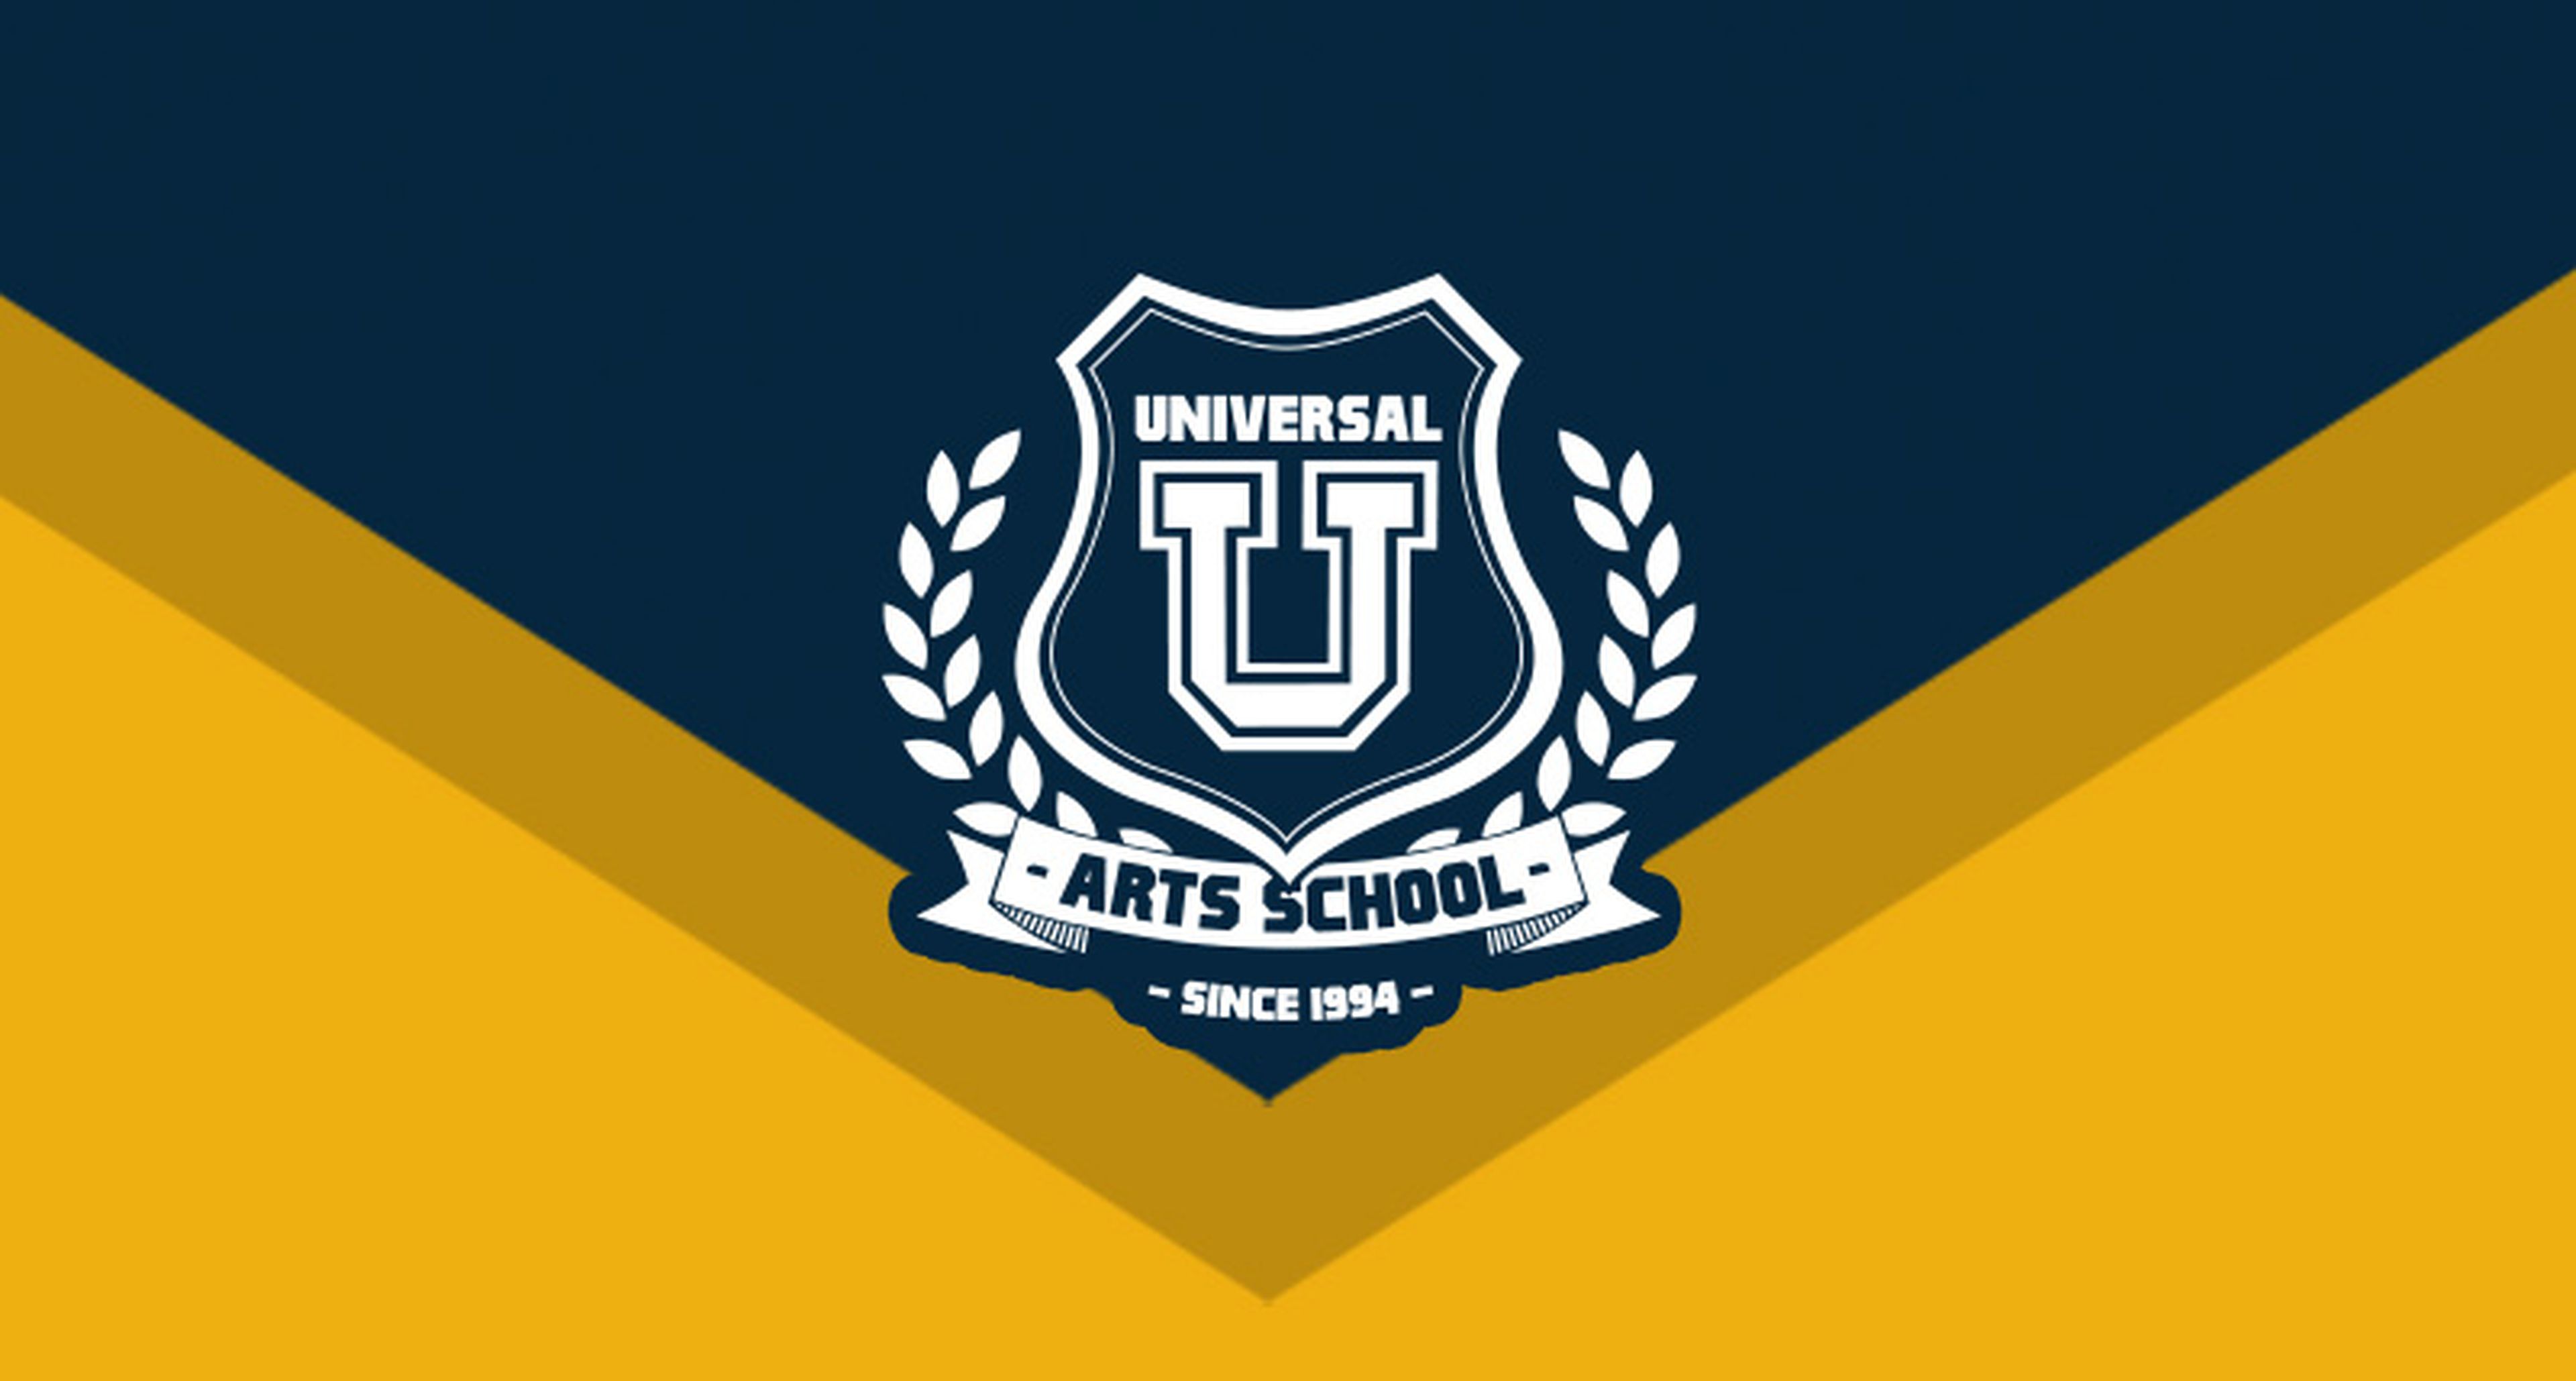 Universal Arts School